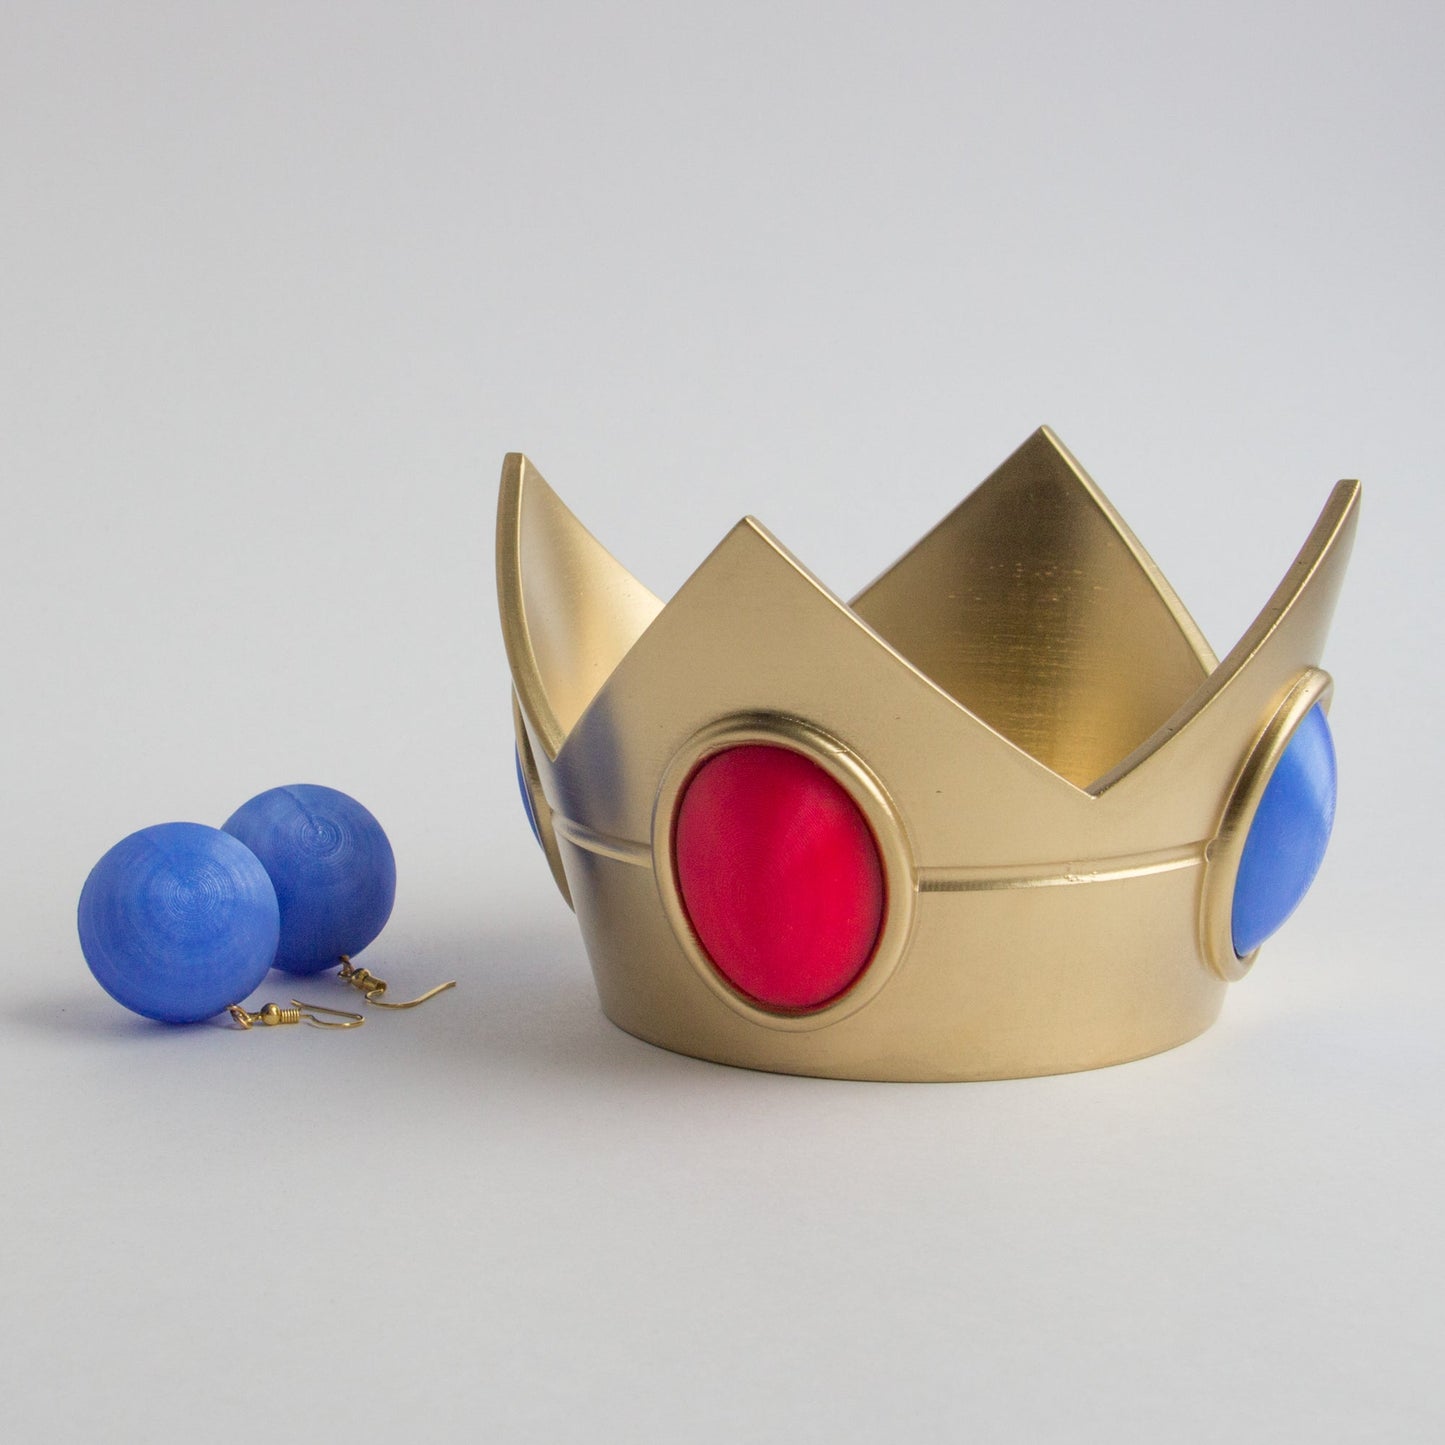 Princess Peach Accessories – Crown, brooch, earrings from Super Mario Bros video game